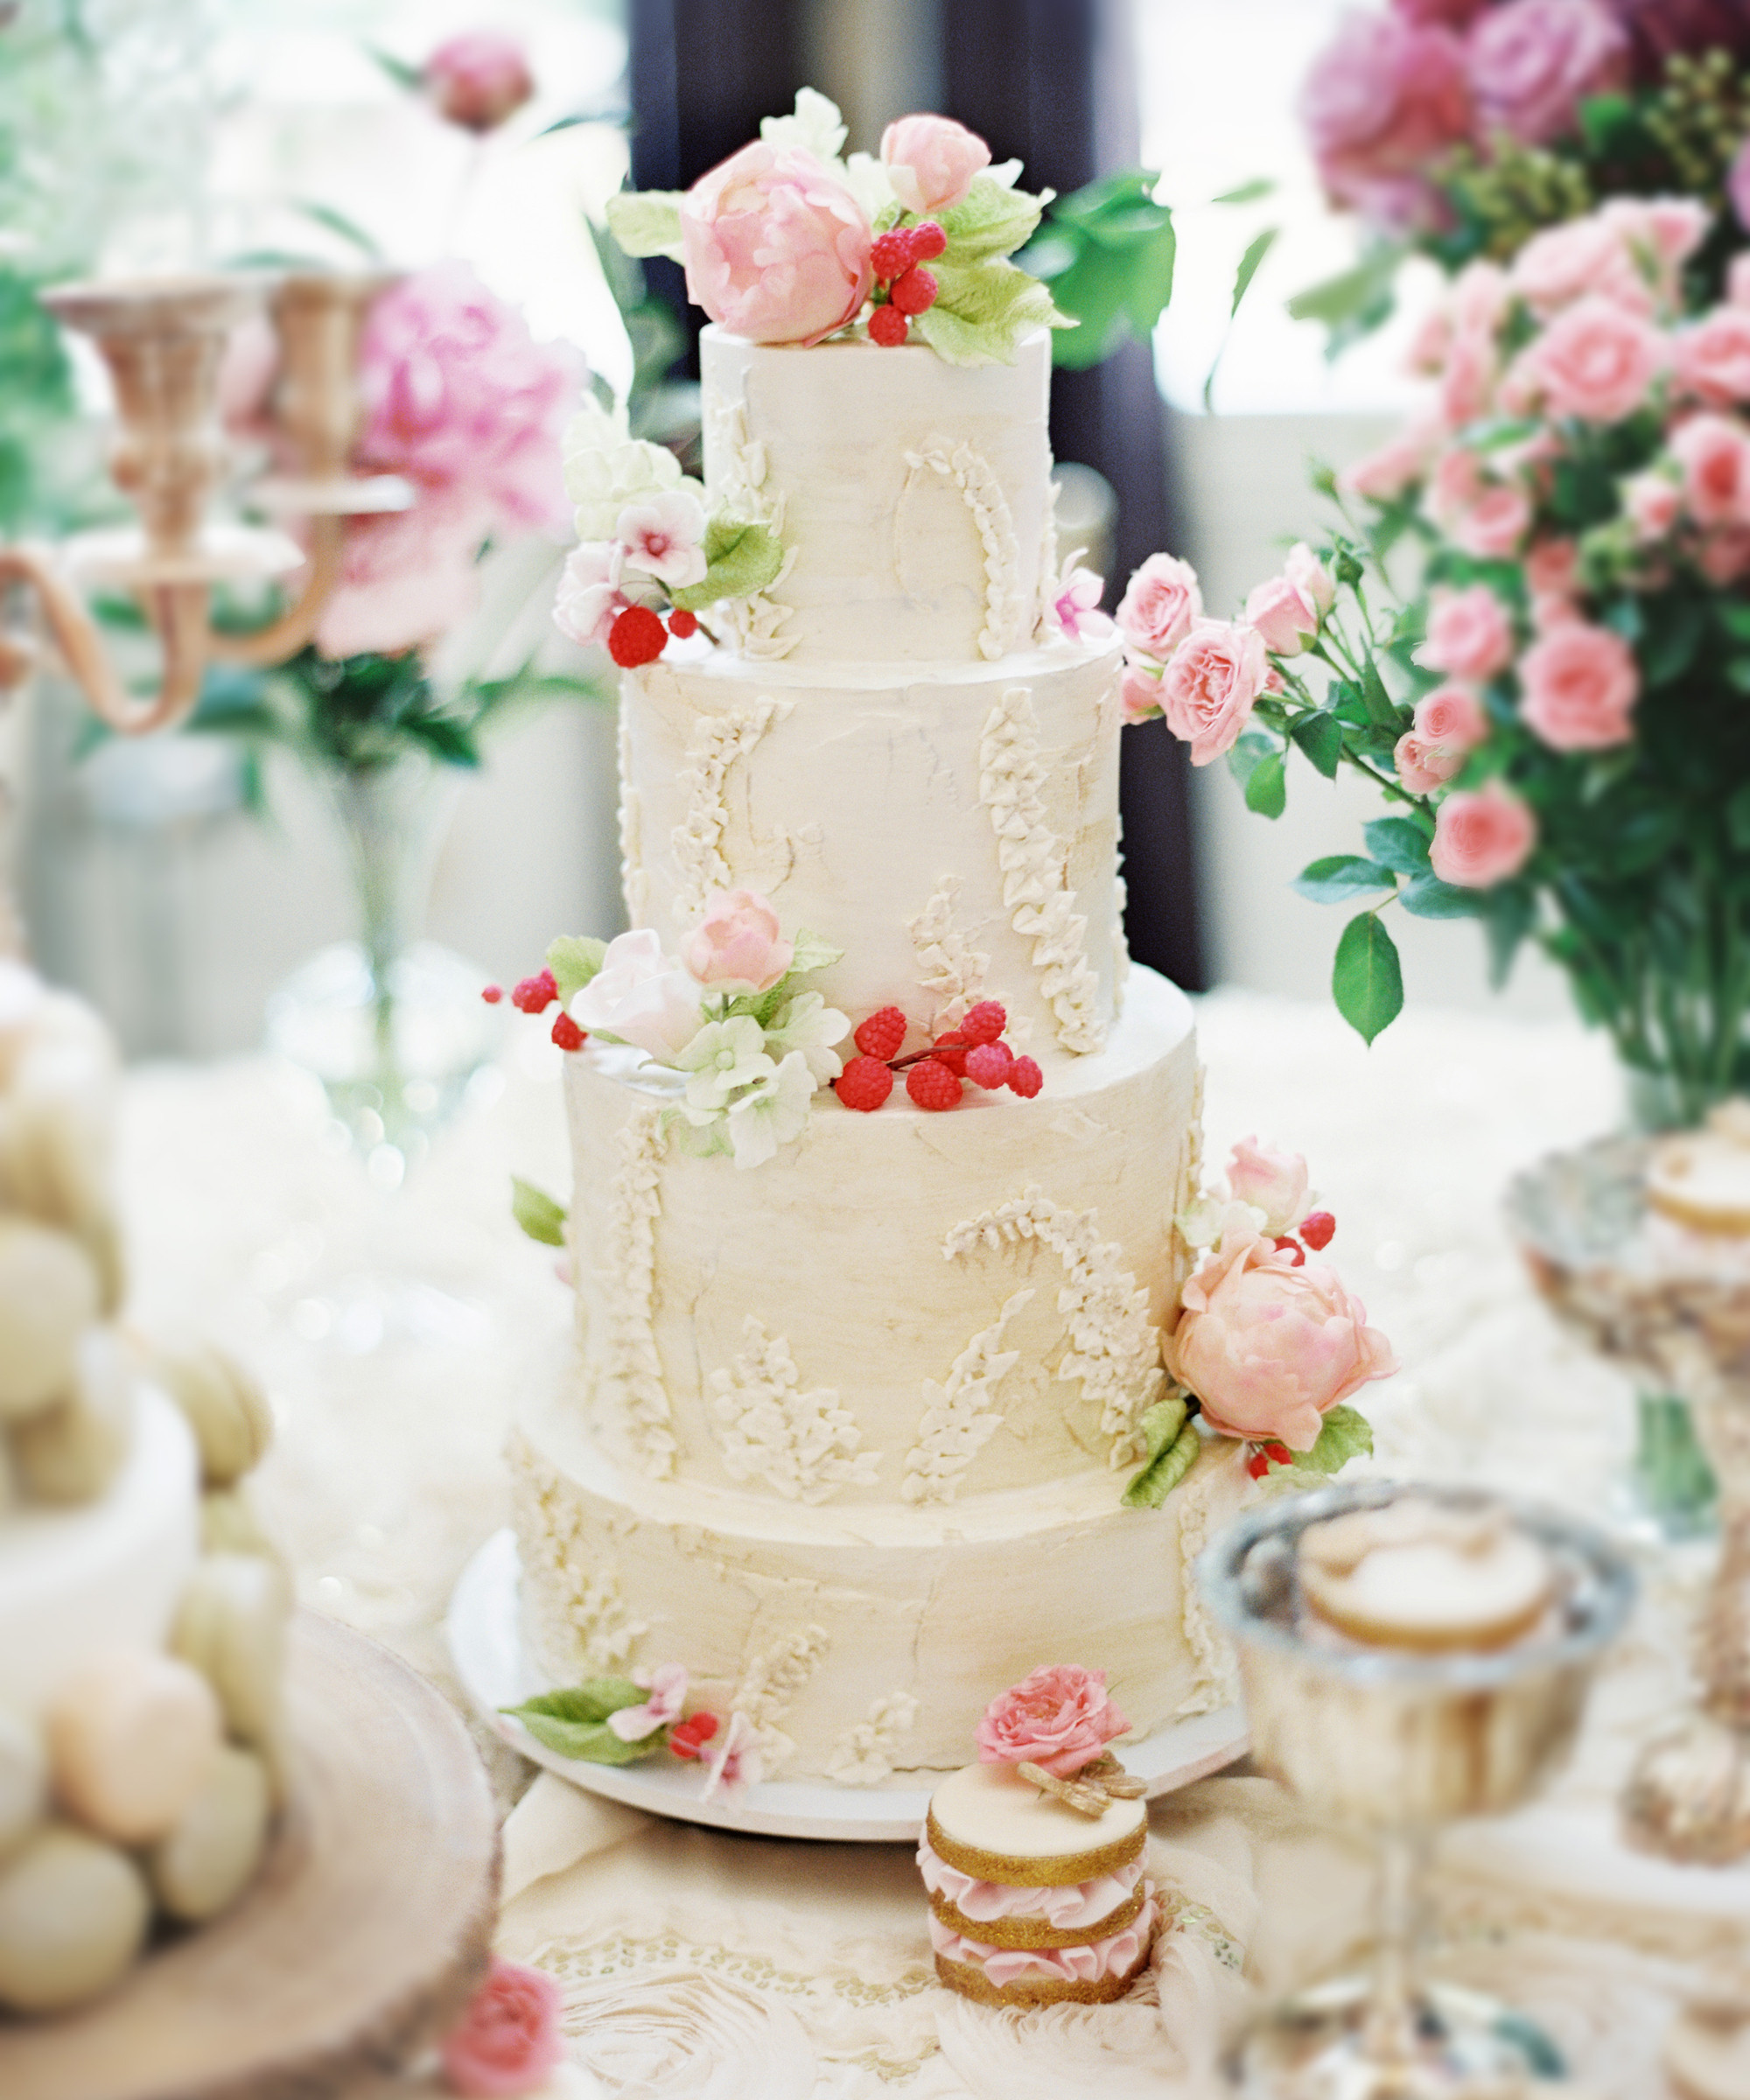 Cakes For A Wedding
 Vegan and Gluten Free Wedding Cake Ideas Alternative